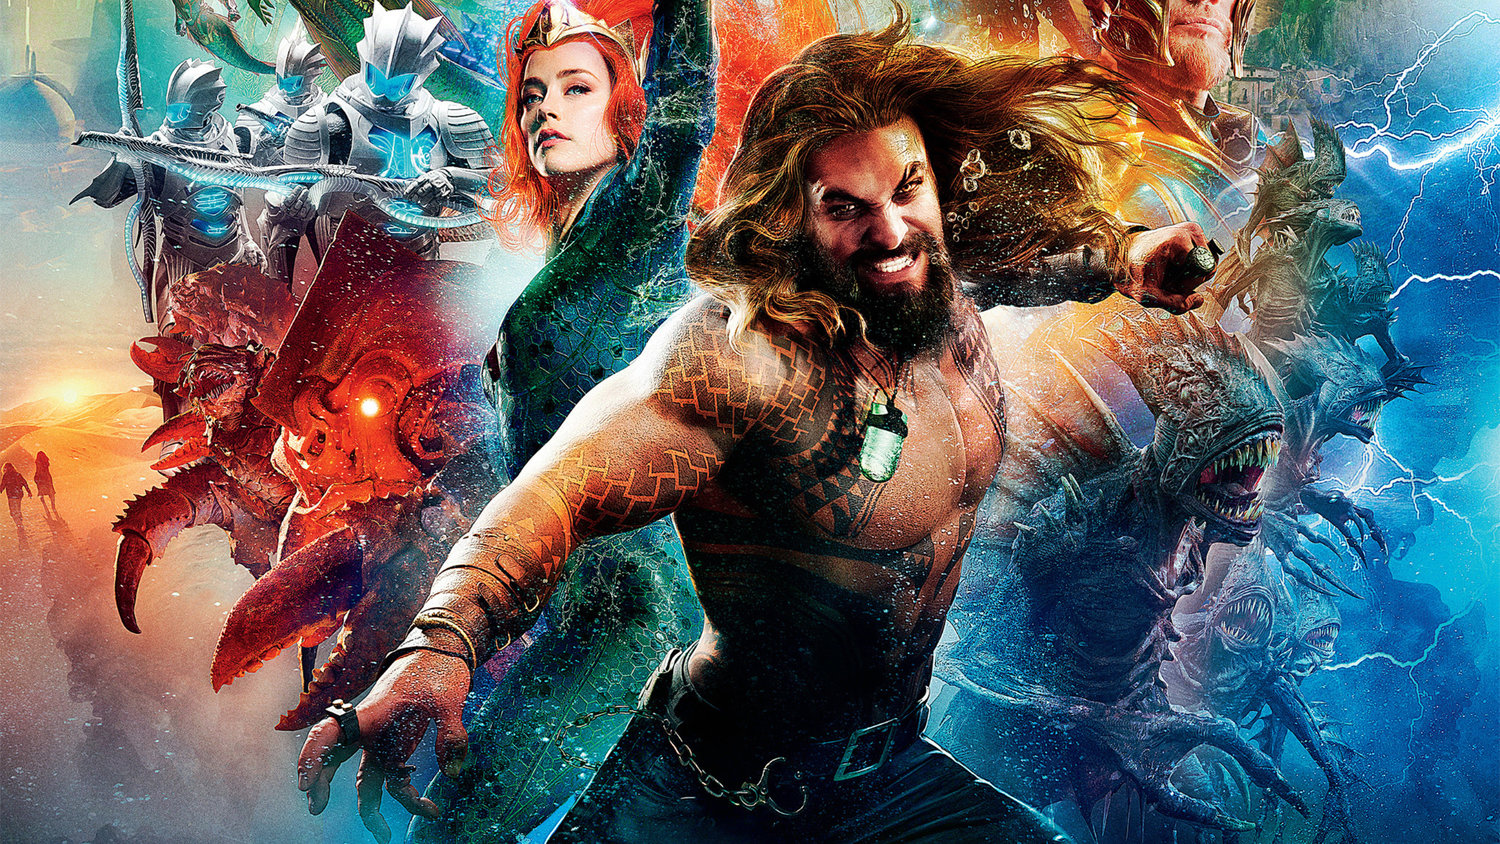 Aquaman Movie Team Wallpapers